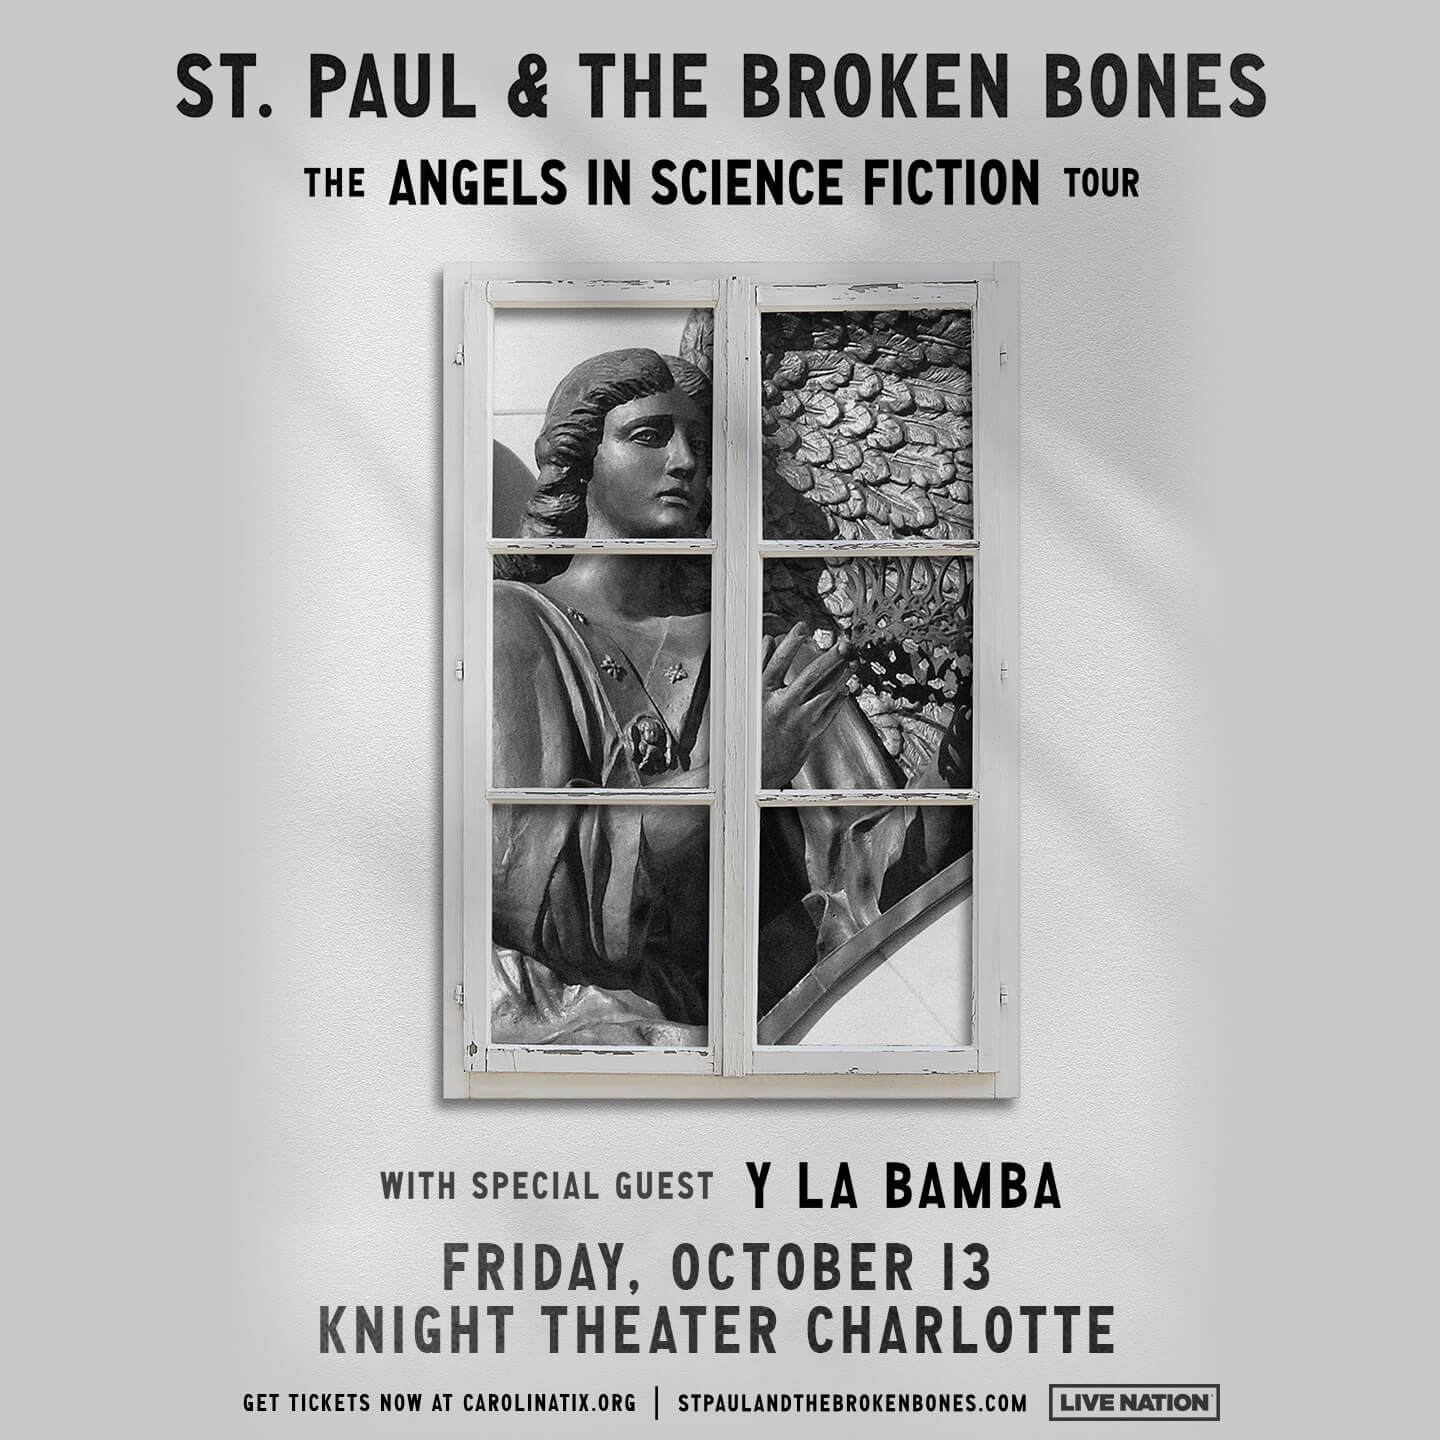 St. Paul & The Broken Bones – The Angels in Science Fiction Tour